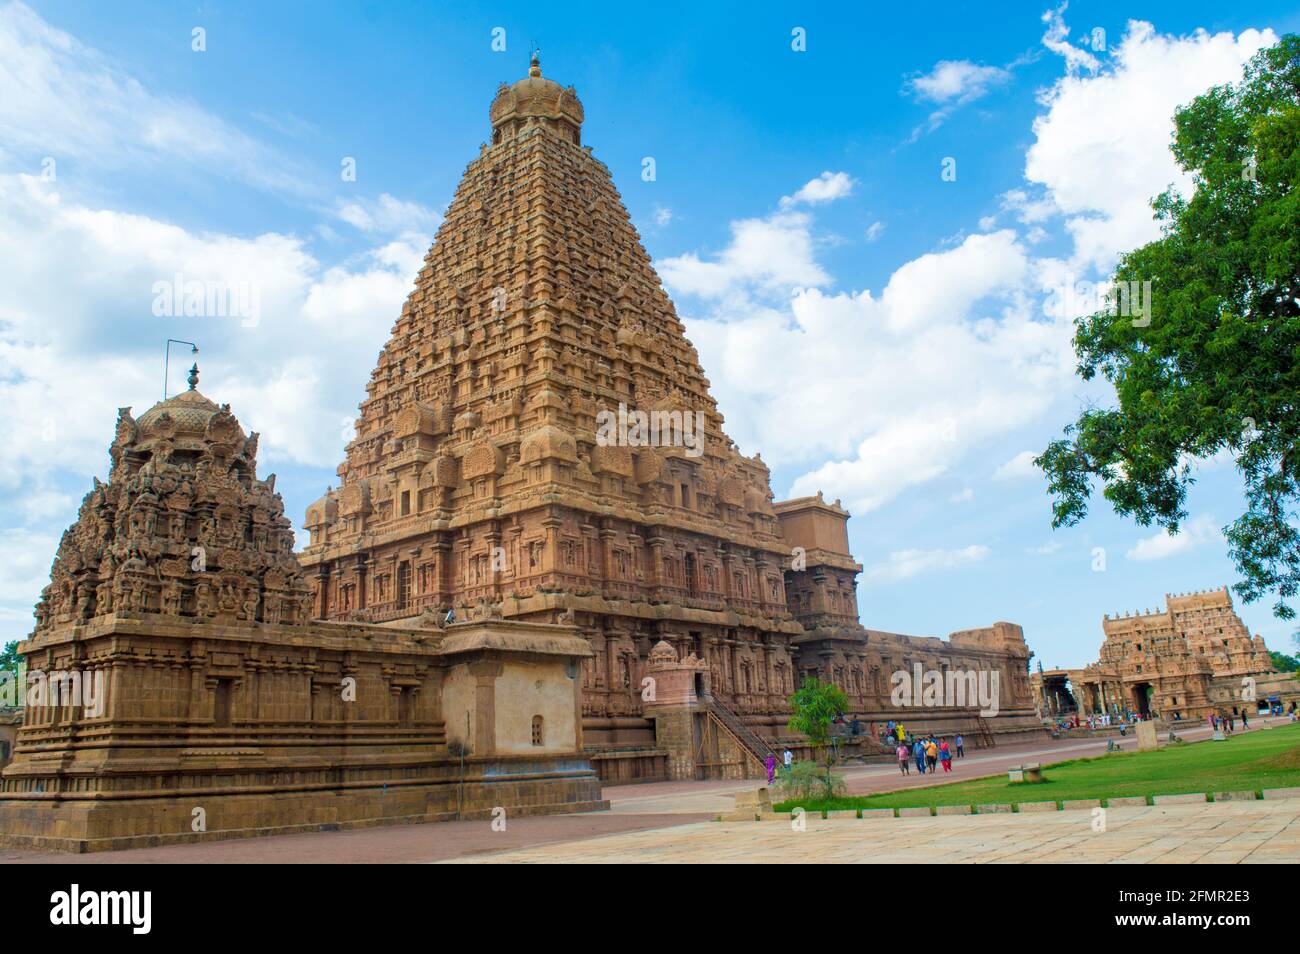 Big Temple in Tamilnadu Stock Photo